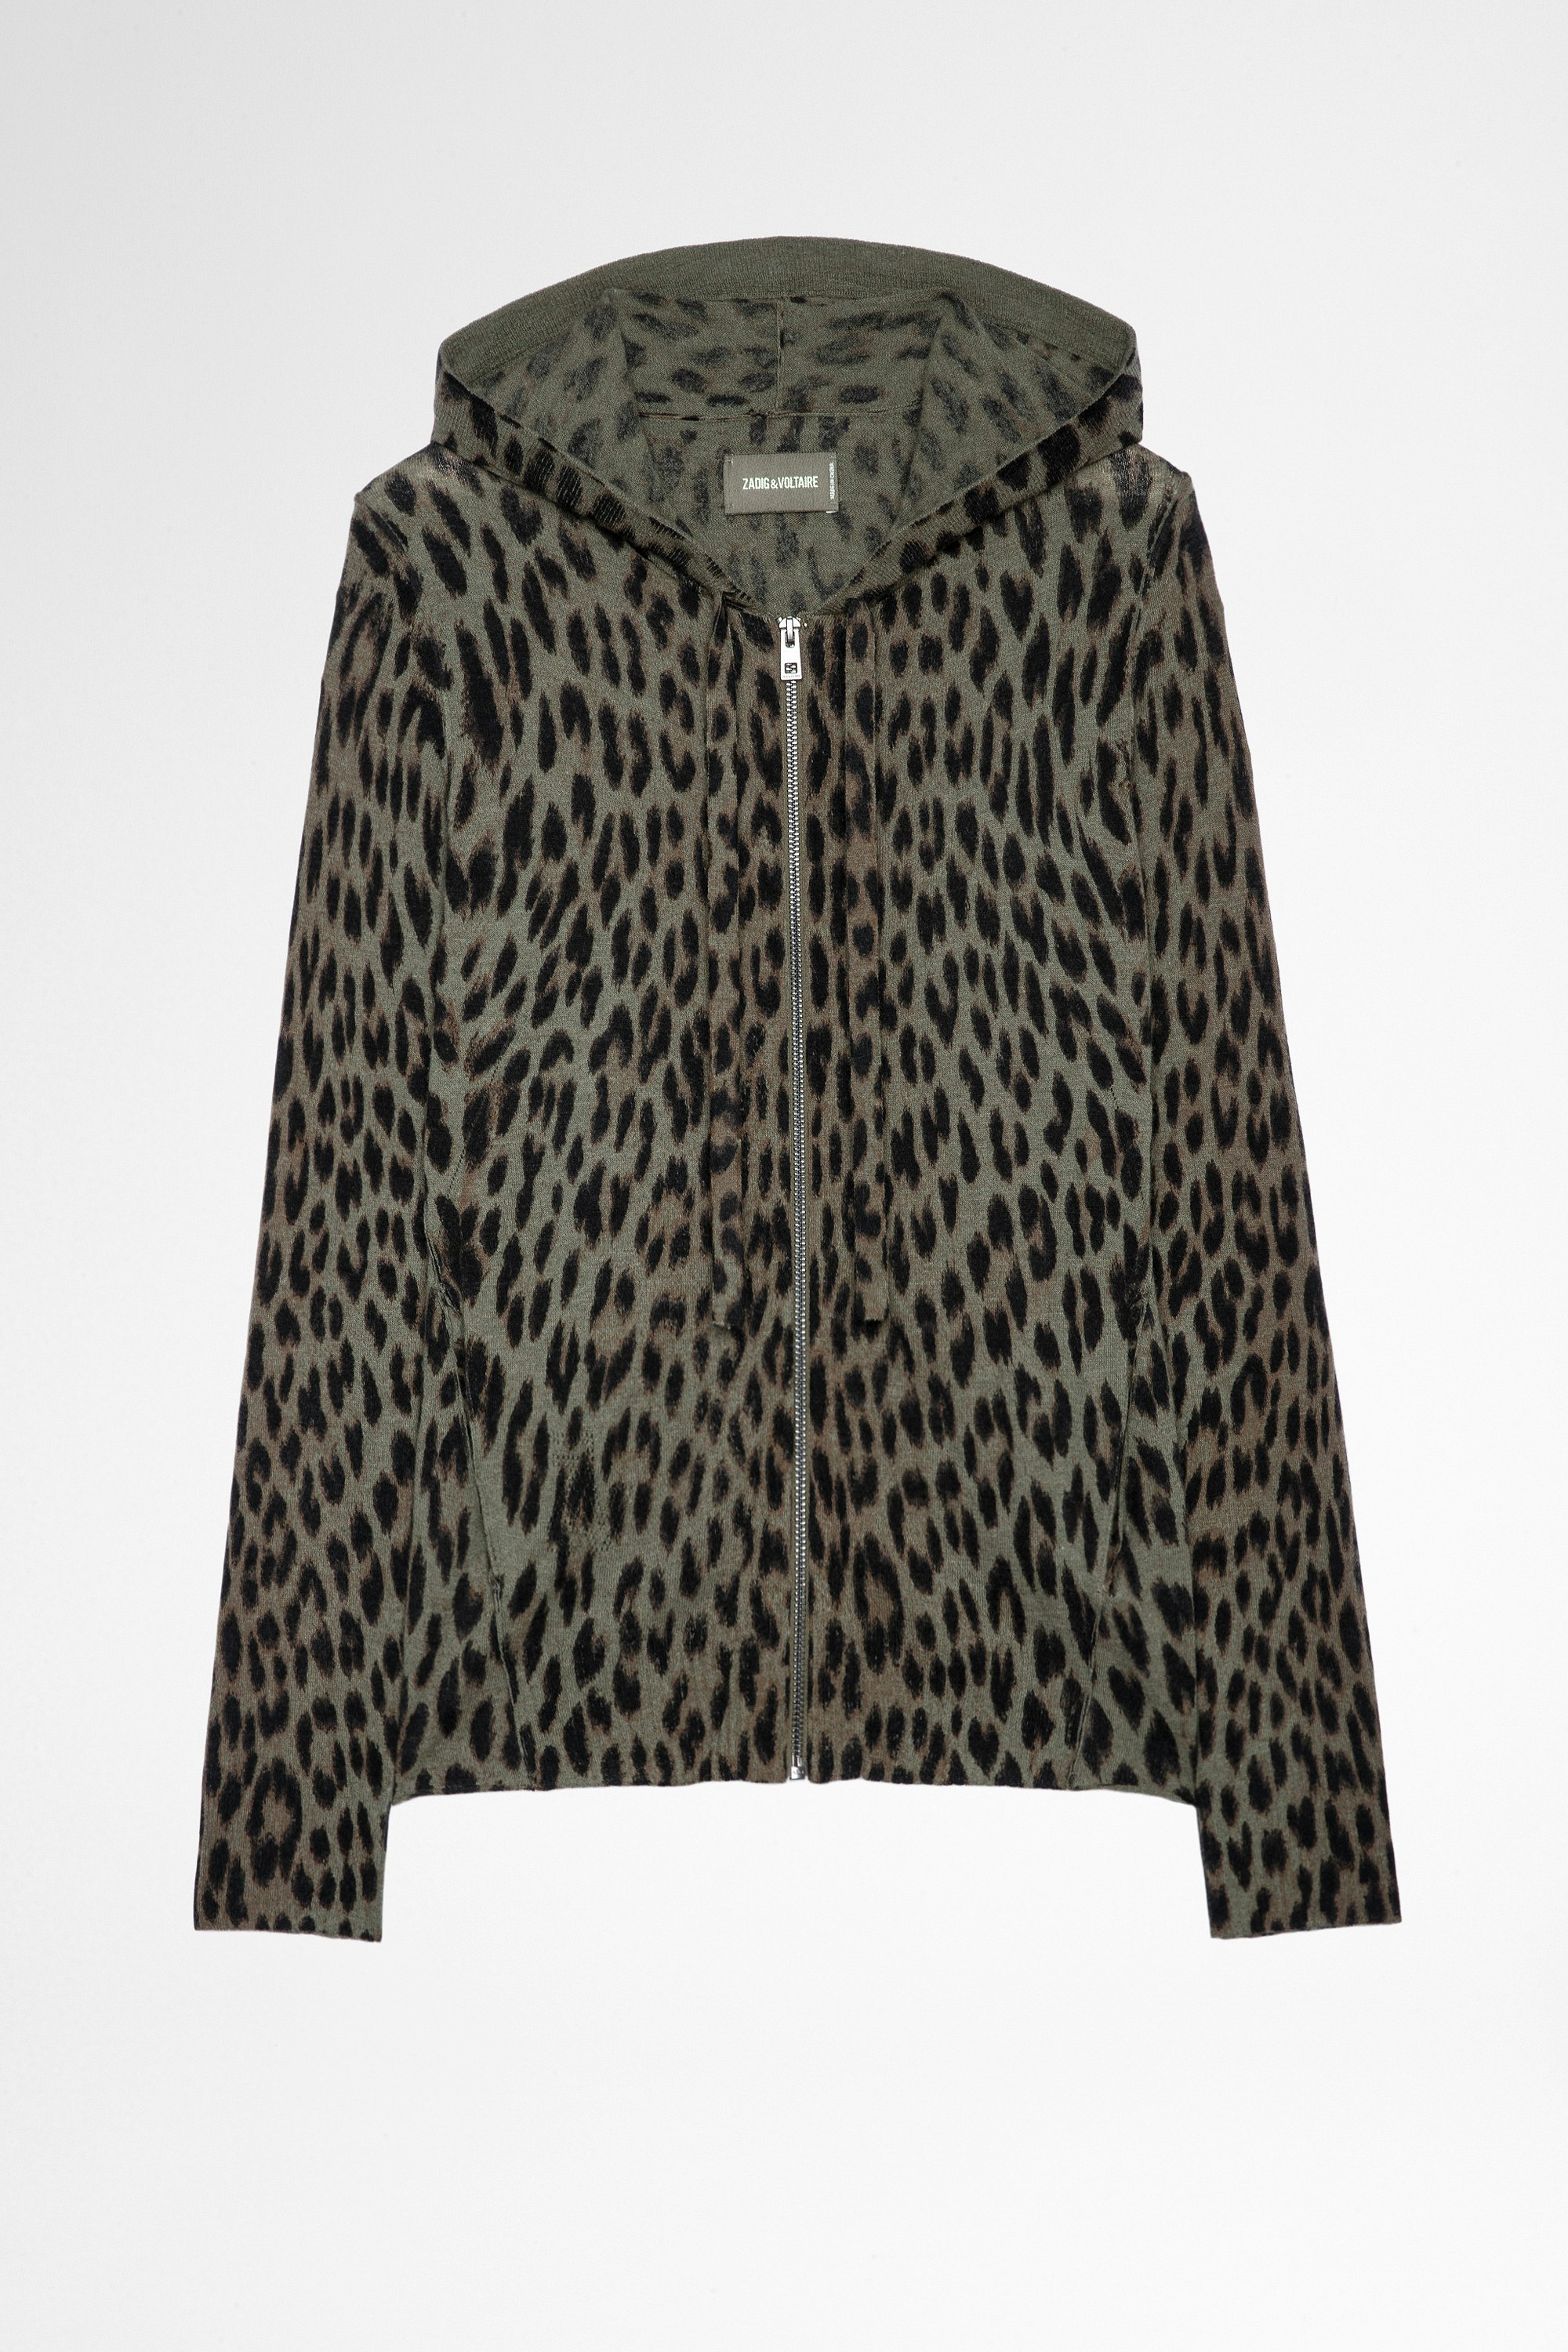 Cassy Leo カシミヤ カーディガン Women's zip-up cardigan in khaki cashmere with leopard print